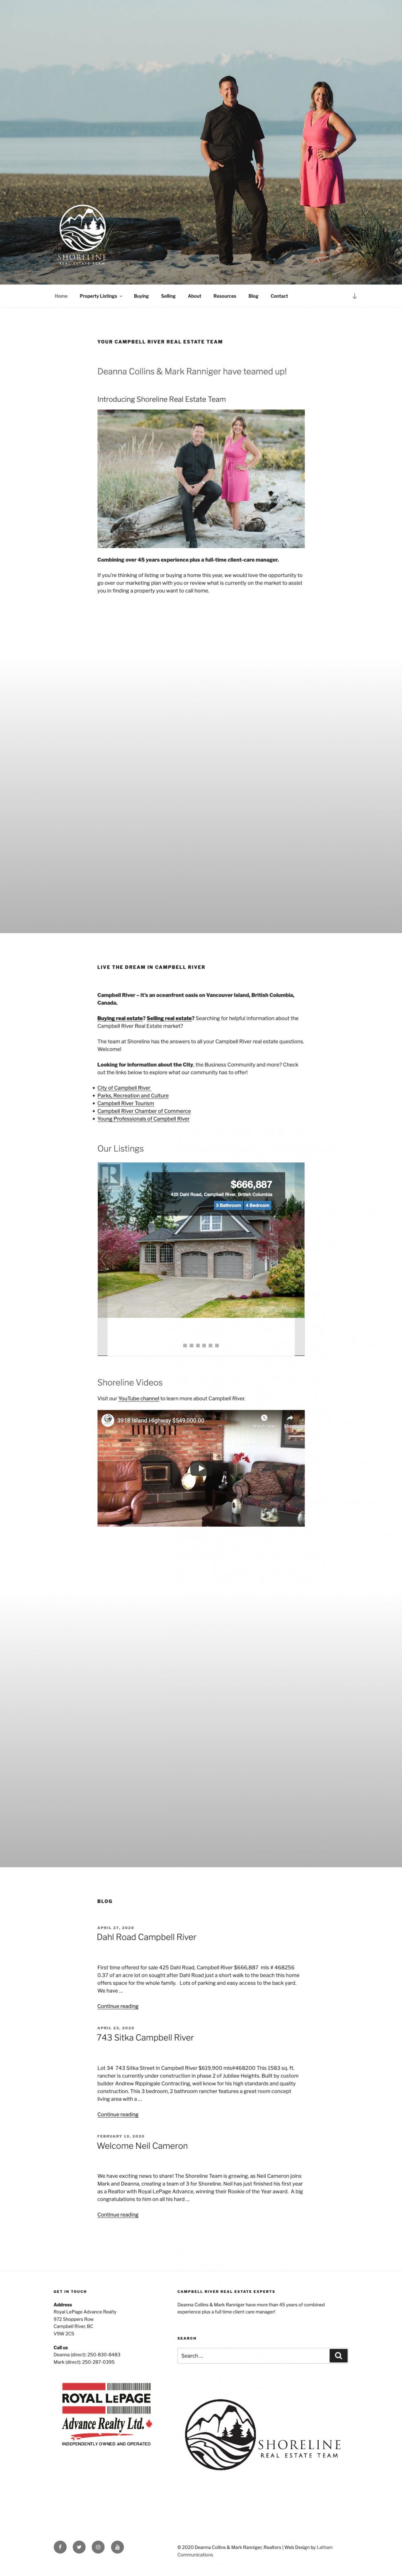 Screenshot of CR Shoreline Real Estate Team website home page.